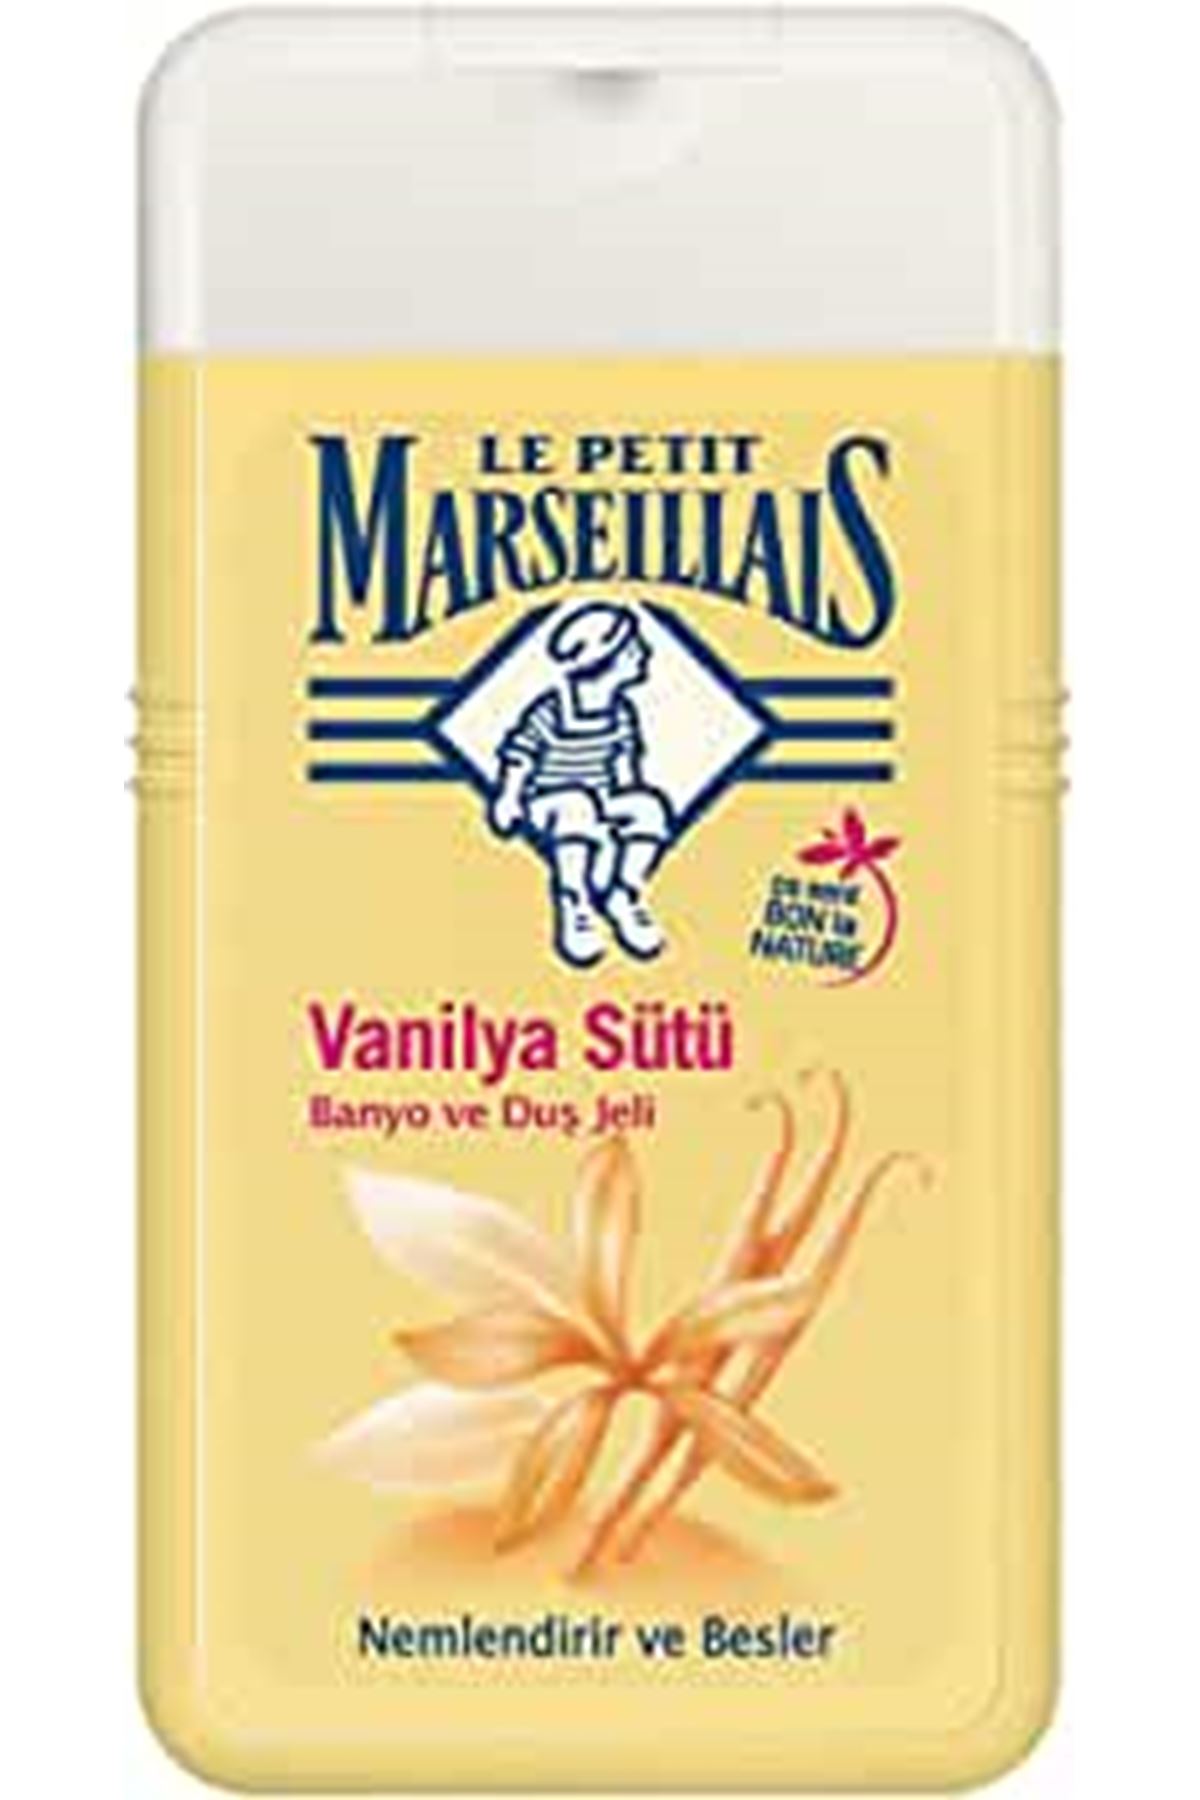 Le Petit Marseillais Vanilya Sütü Duş jeli 250 ML